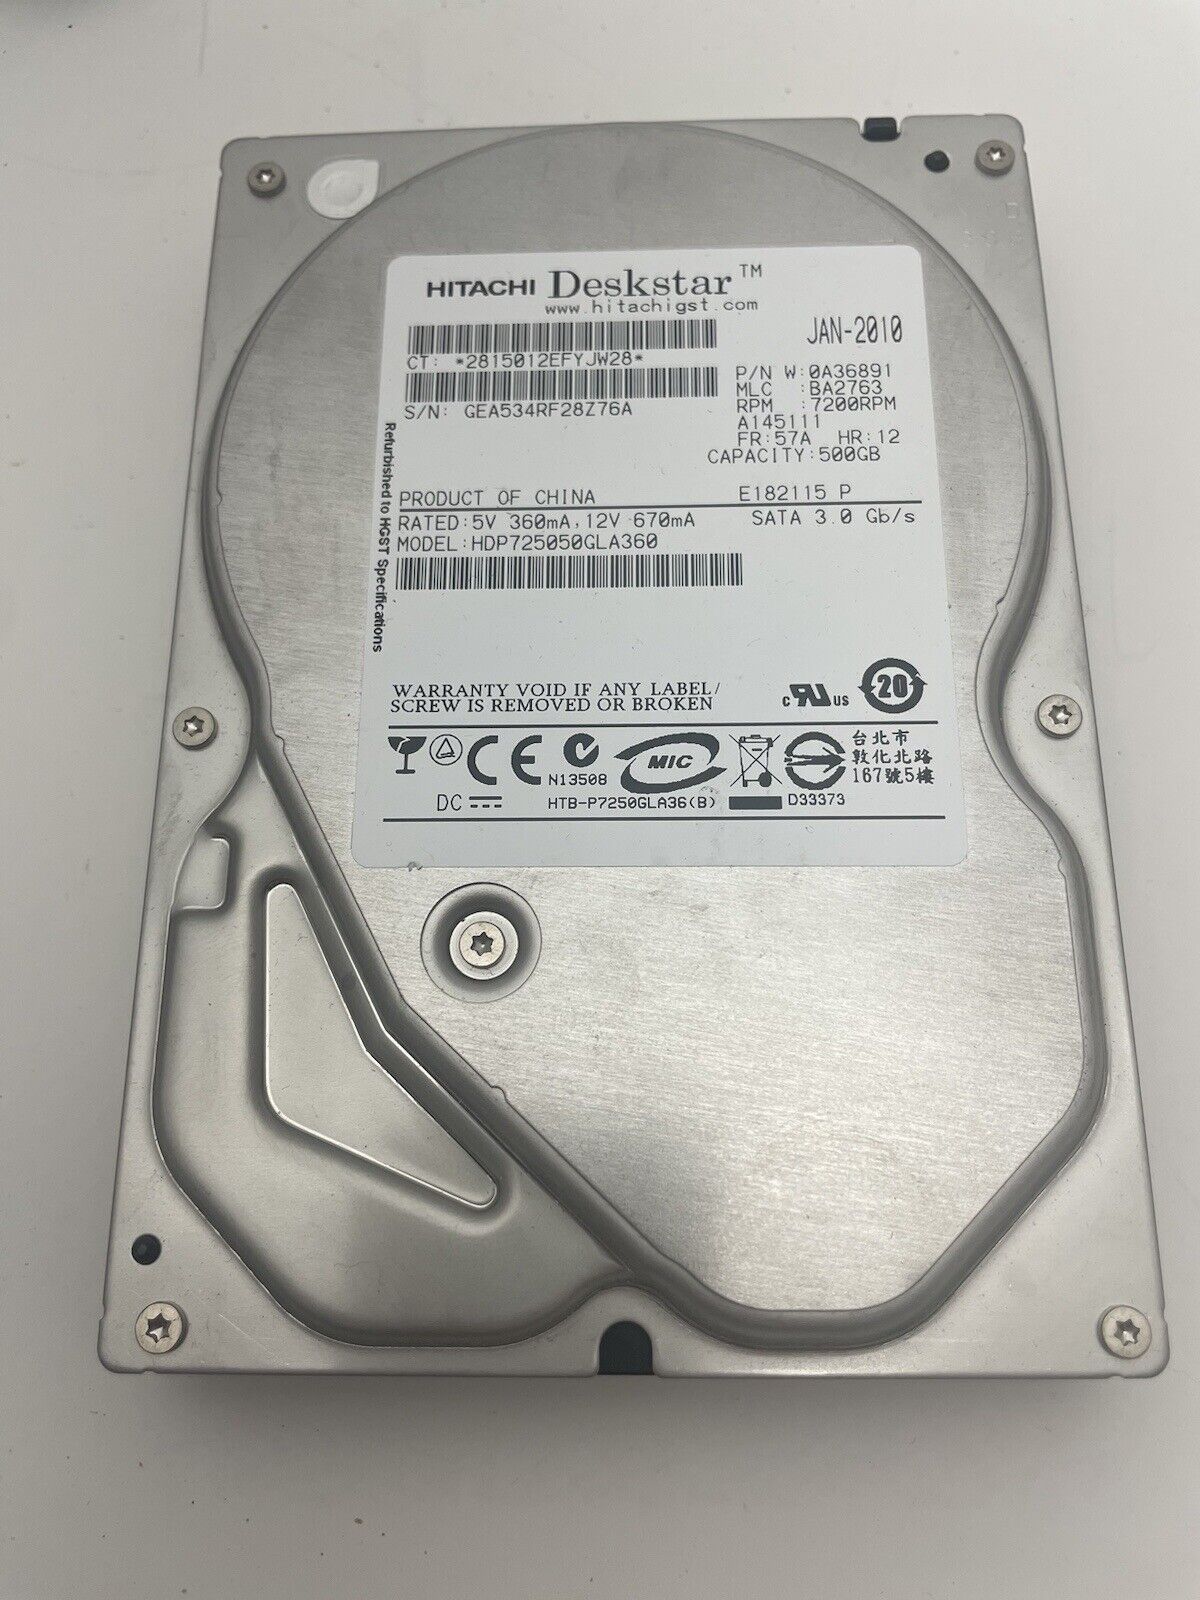 HITACHI Deskstar 500GB Internal Desktop Hard Drive (P/N:0A35415) SATA